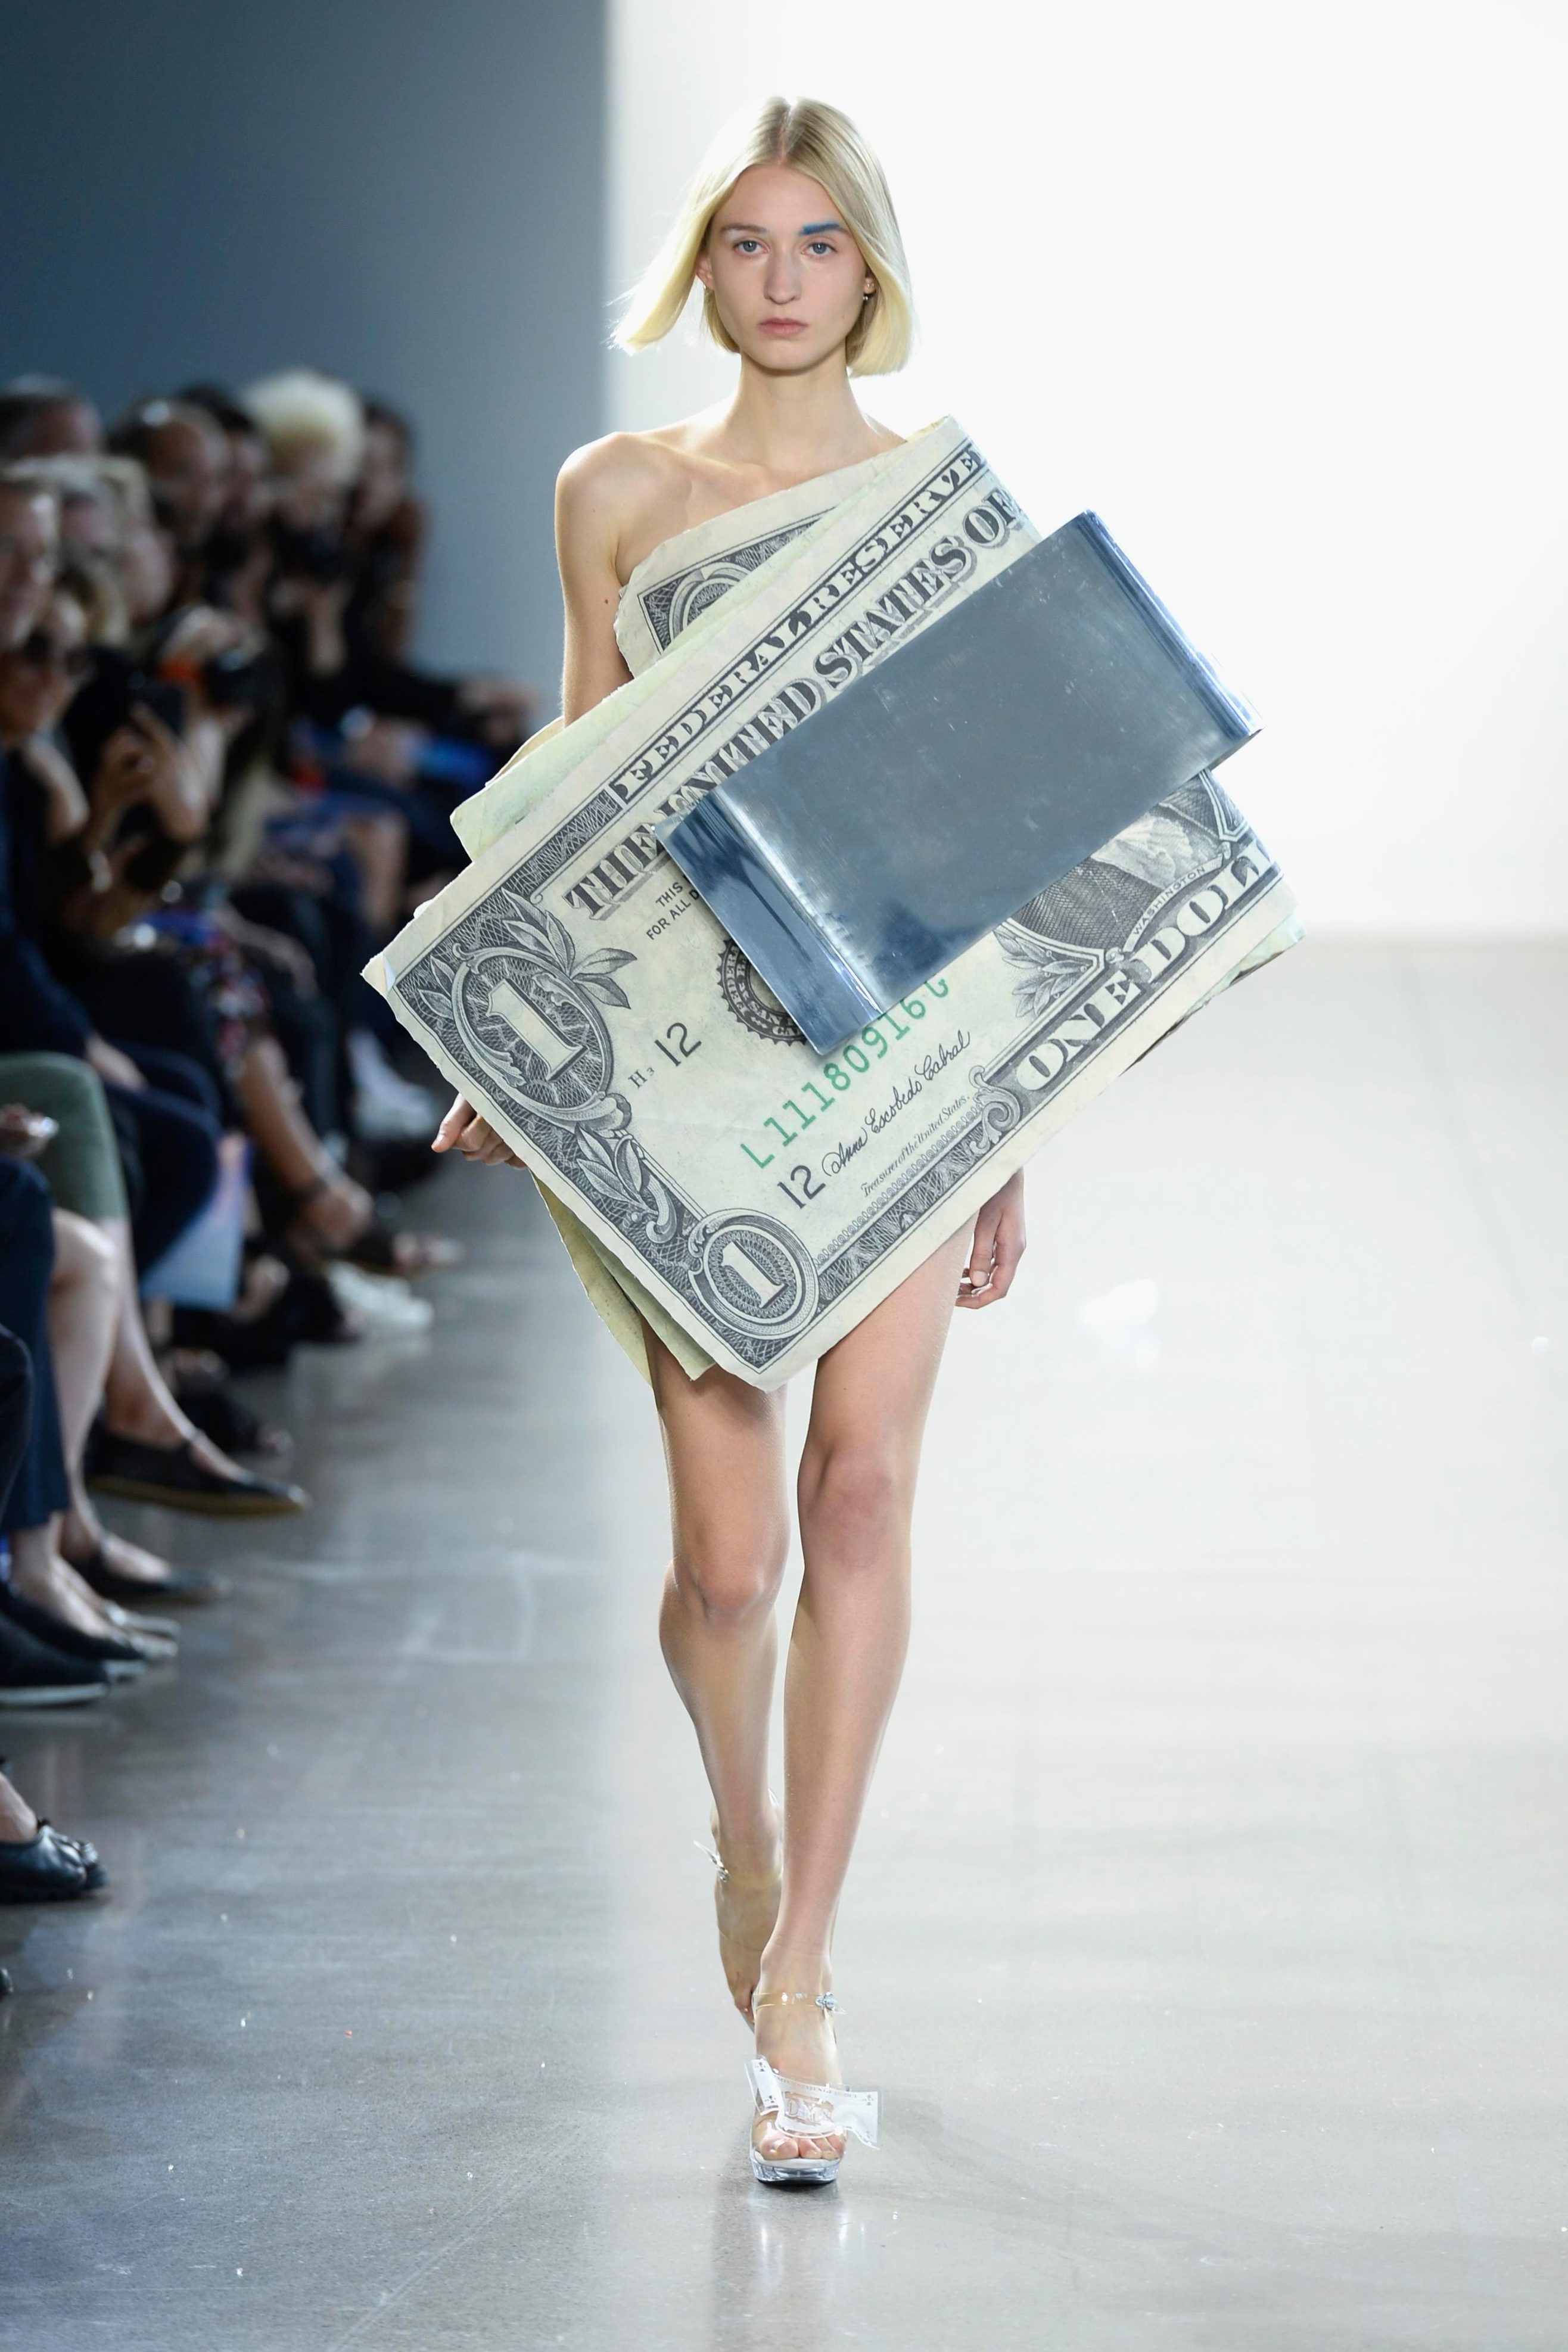 See through fashion runway models